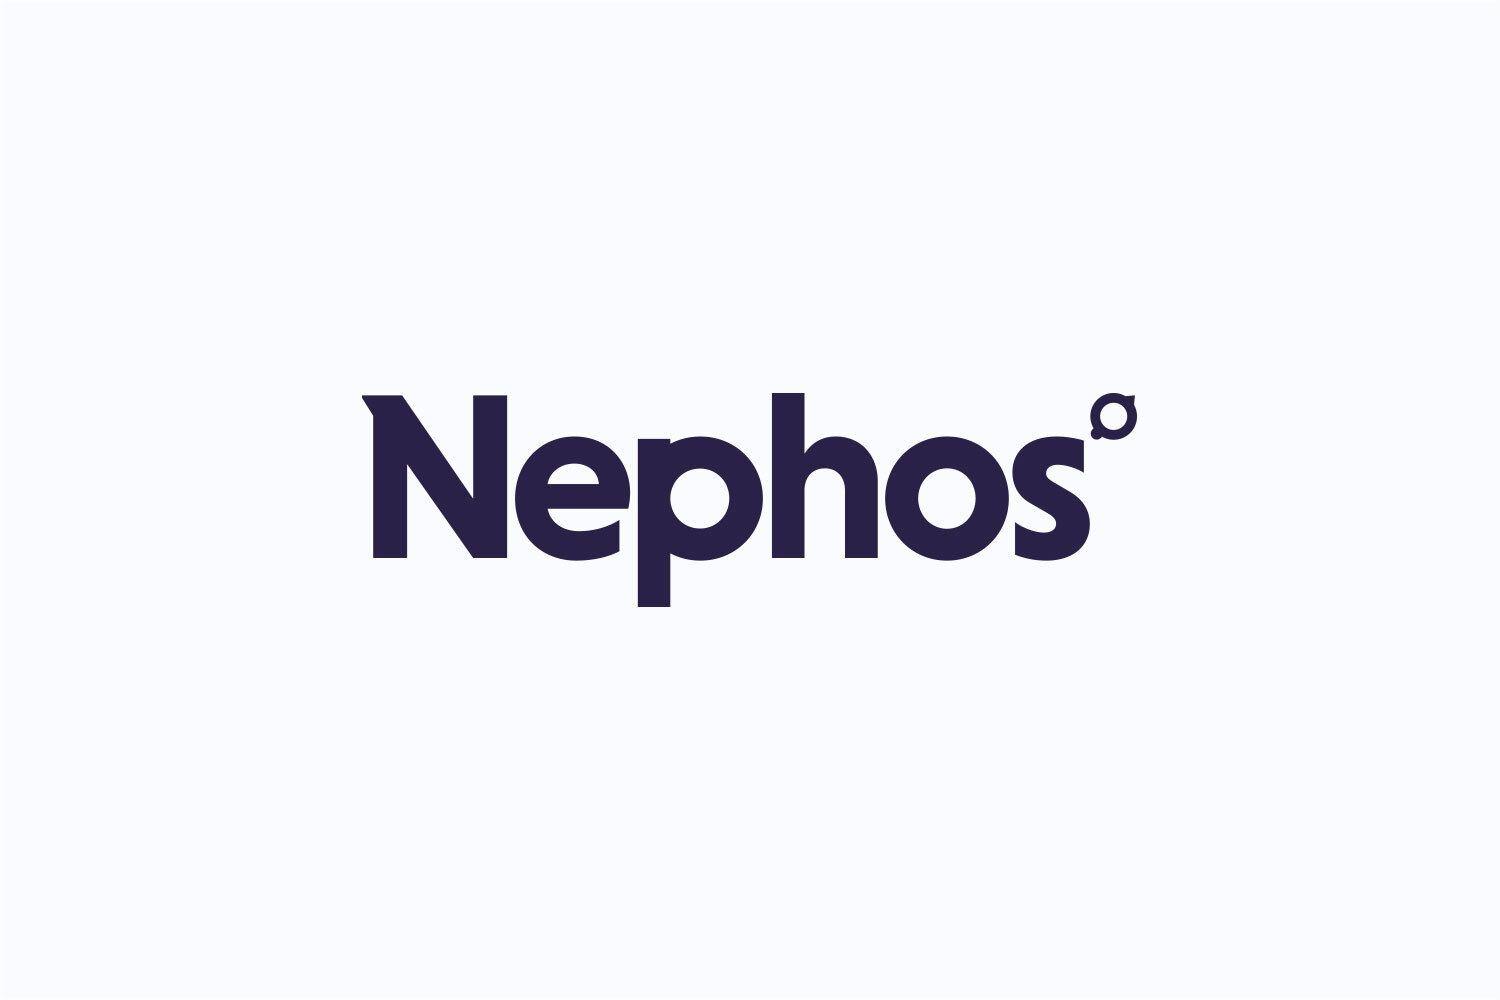 Nephos logo, developed by Mighty